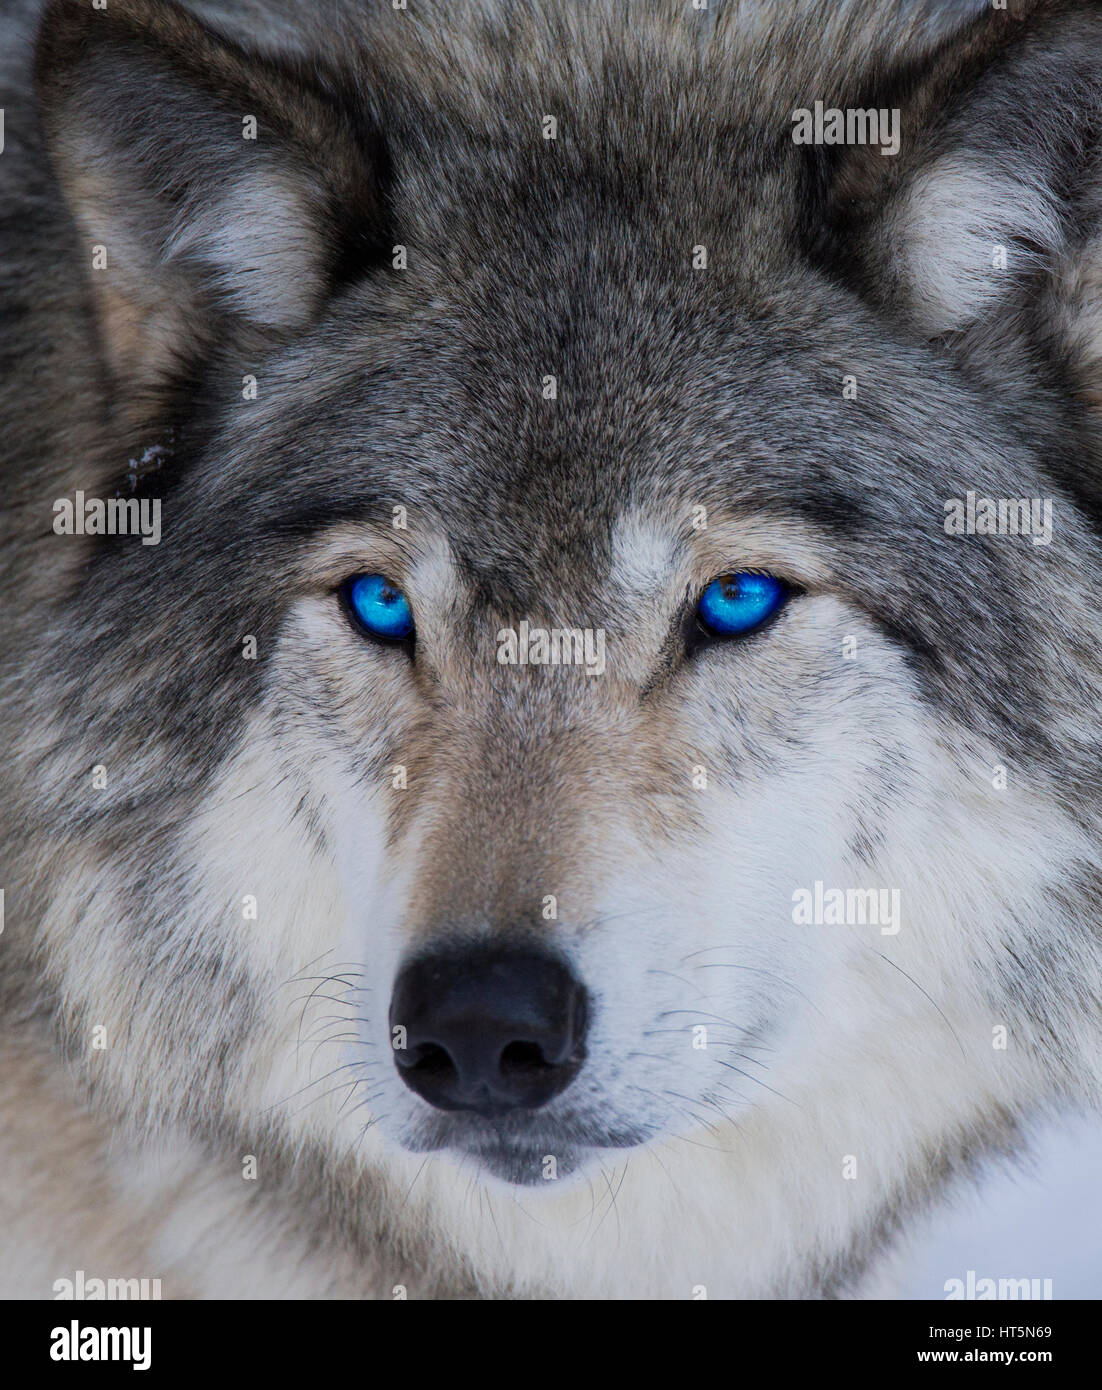 Blue eyes wolf portrait Stock Photo - Alamy